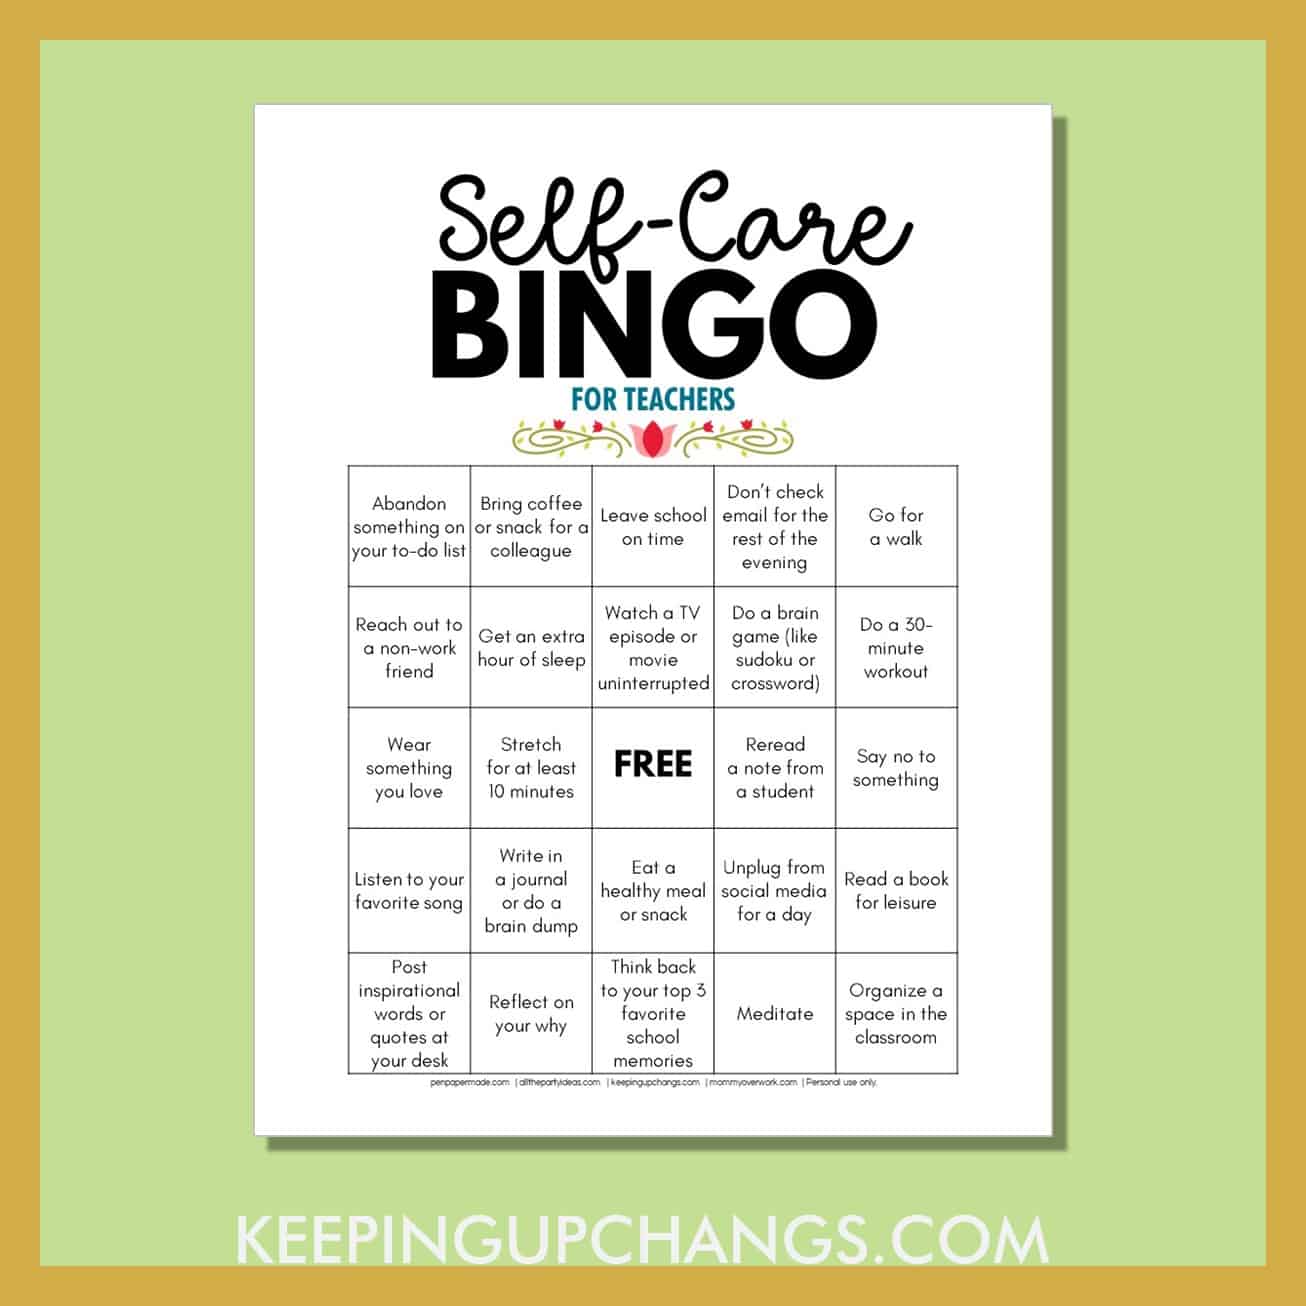 teacher self care bingo with fun activities for positivity and mental wellness.